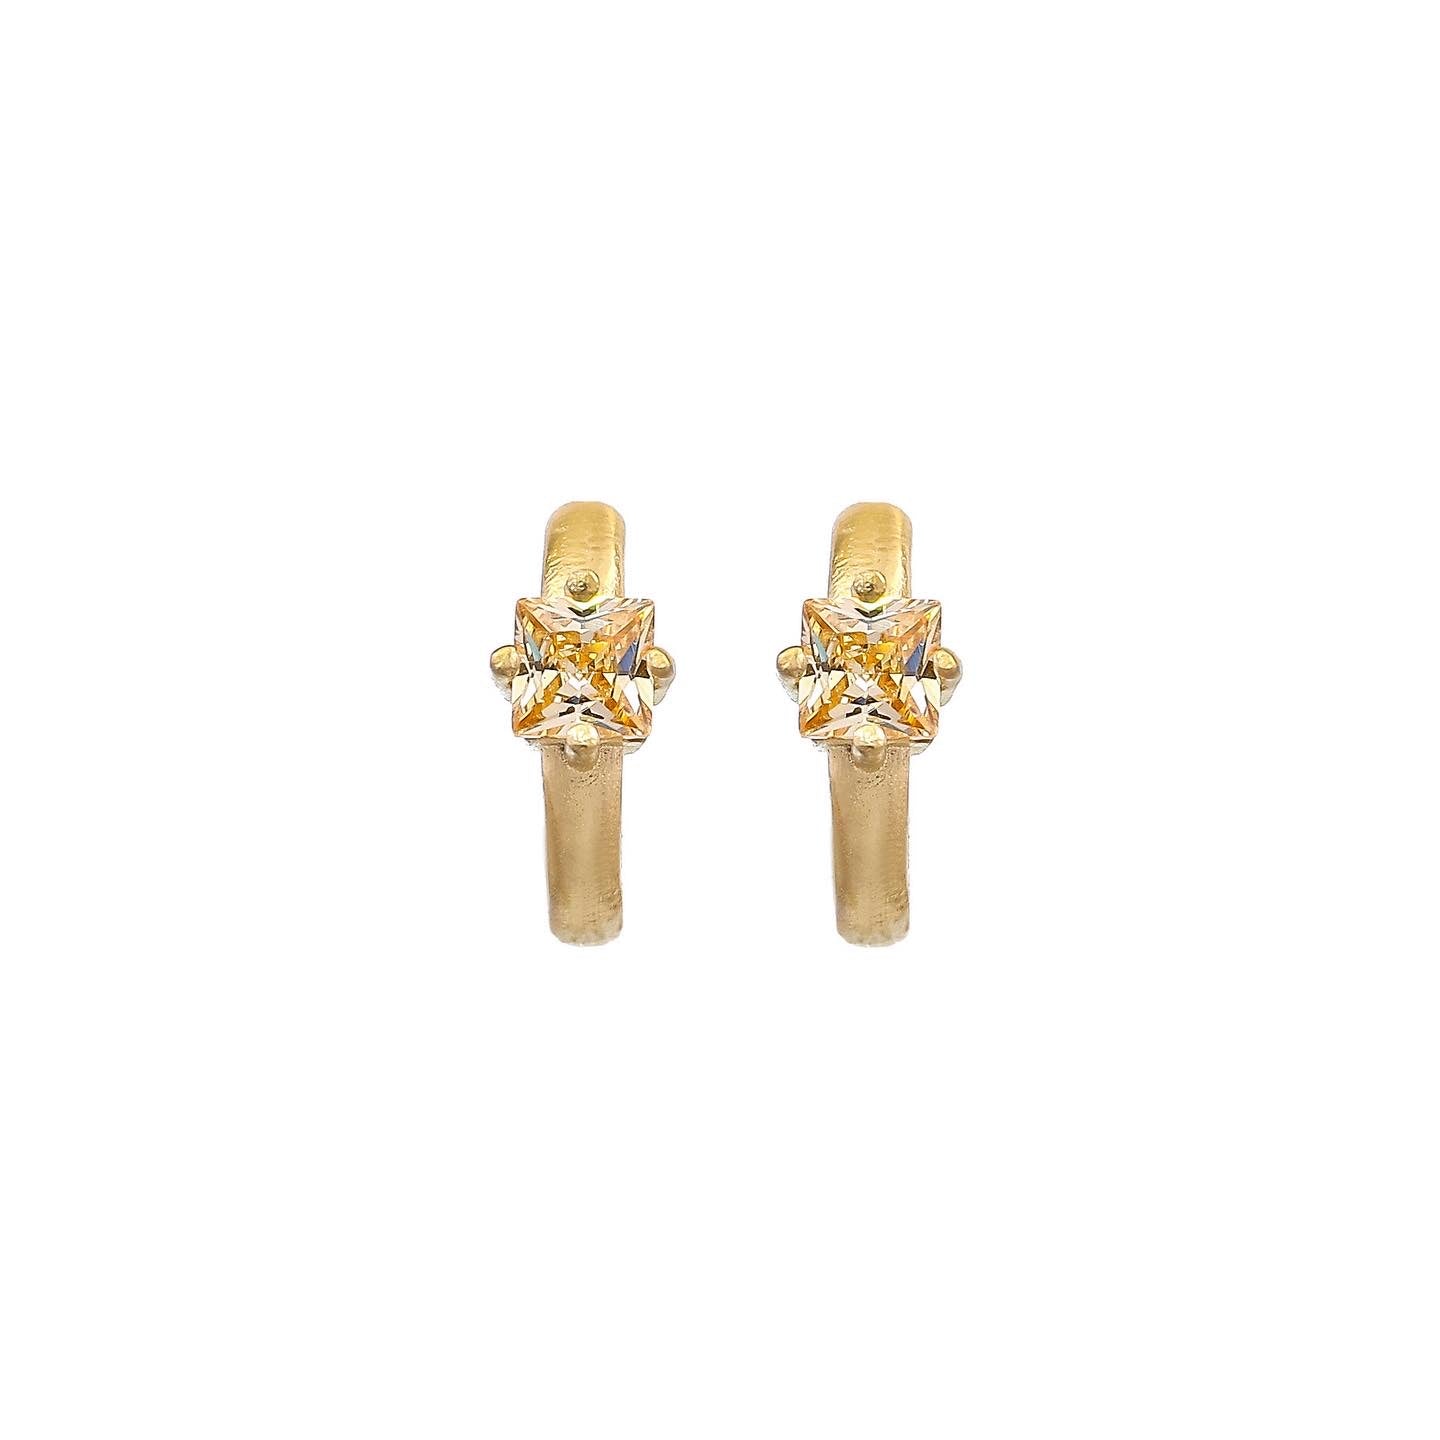 Emma Stud earrings - Champagne